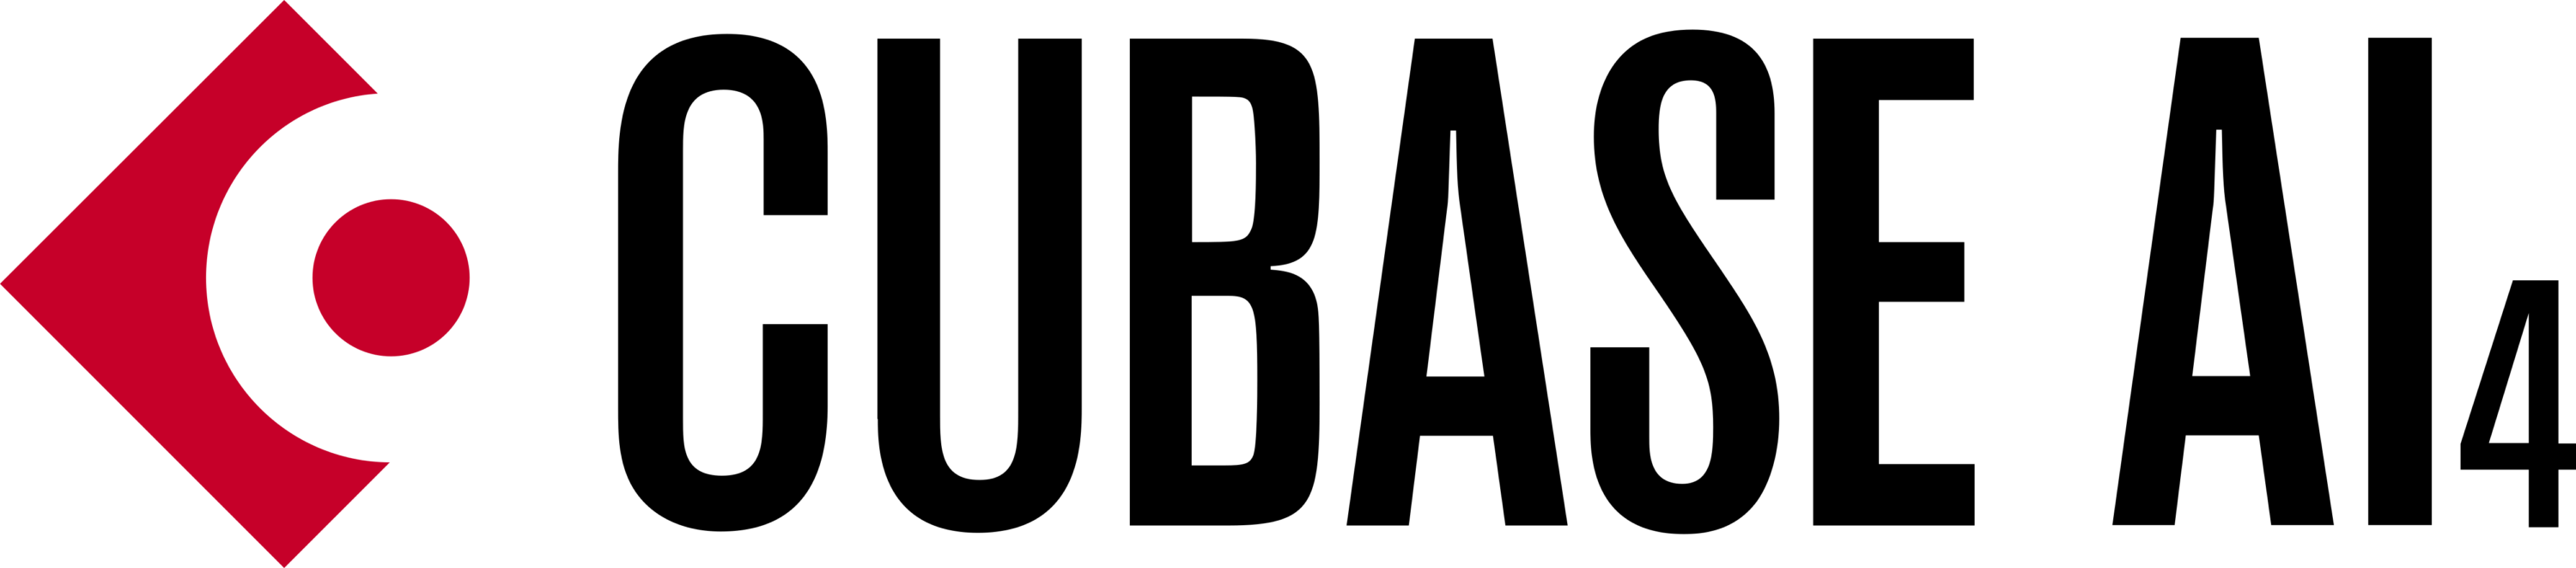 Cubase AI 4 Logo